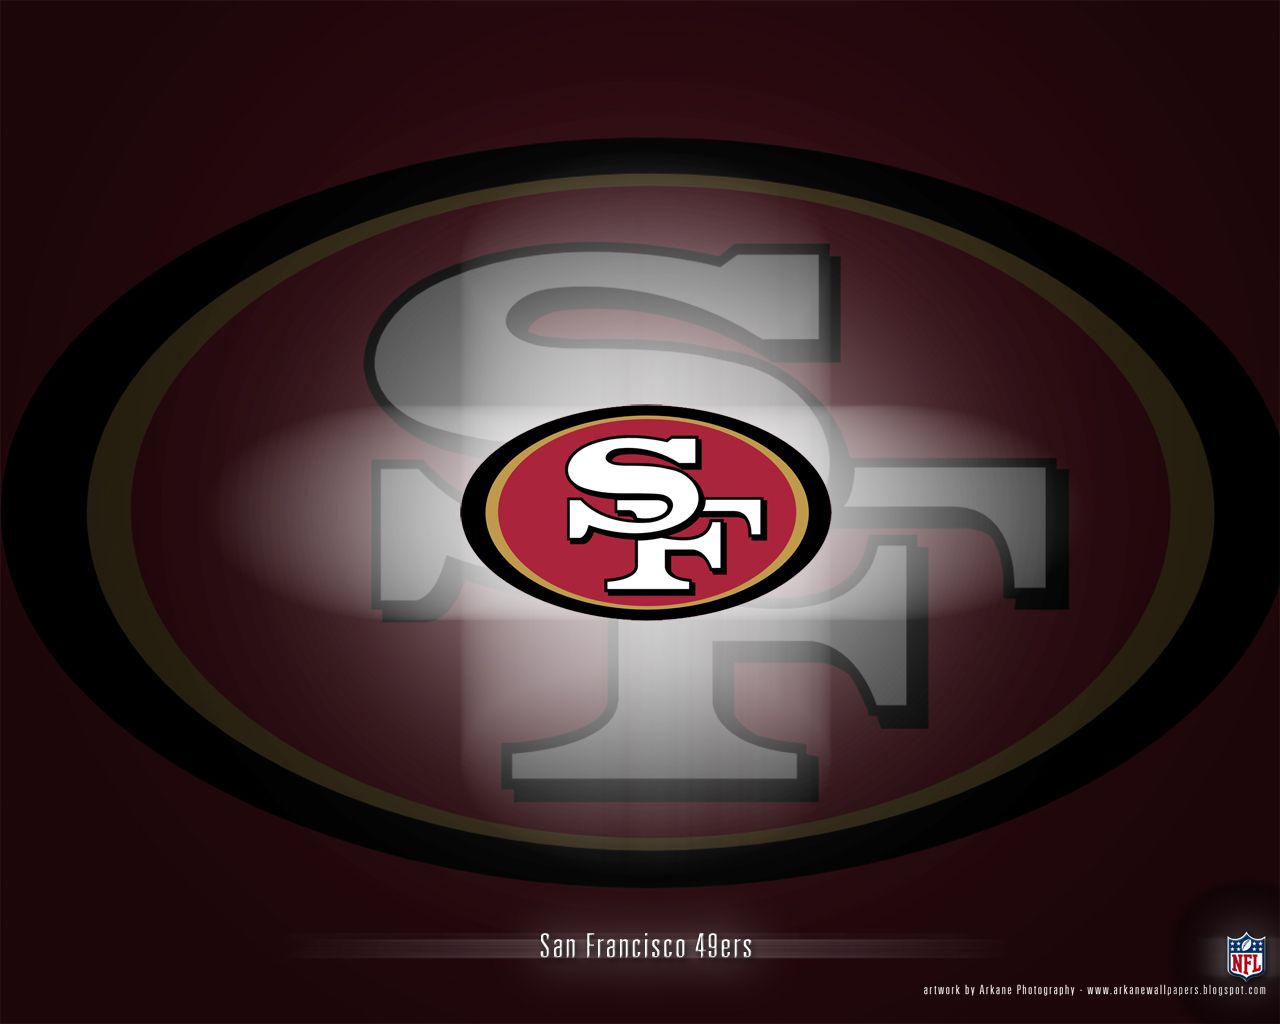 San Francisco 49ers. Arkane NFL Wallpaper: San Francisco 49ers. 1. San francisco 49ers, San francisco 49ers logo, San francisco 49ers nfl